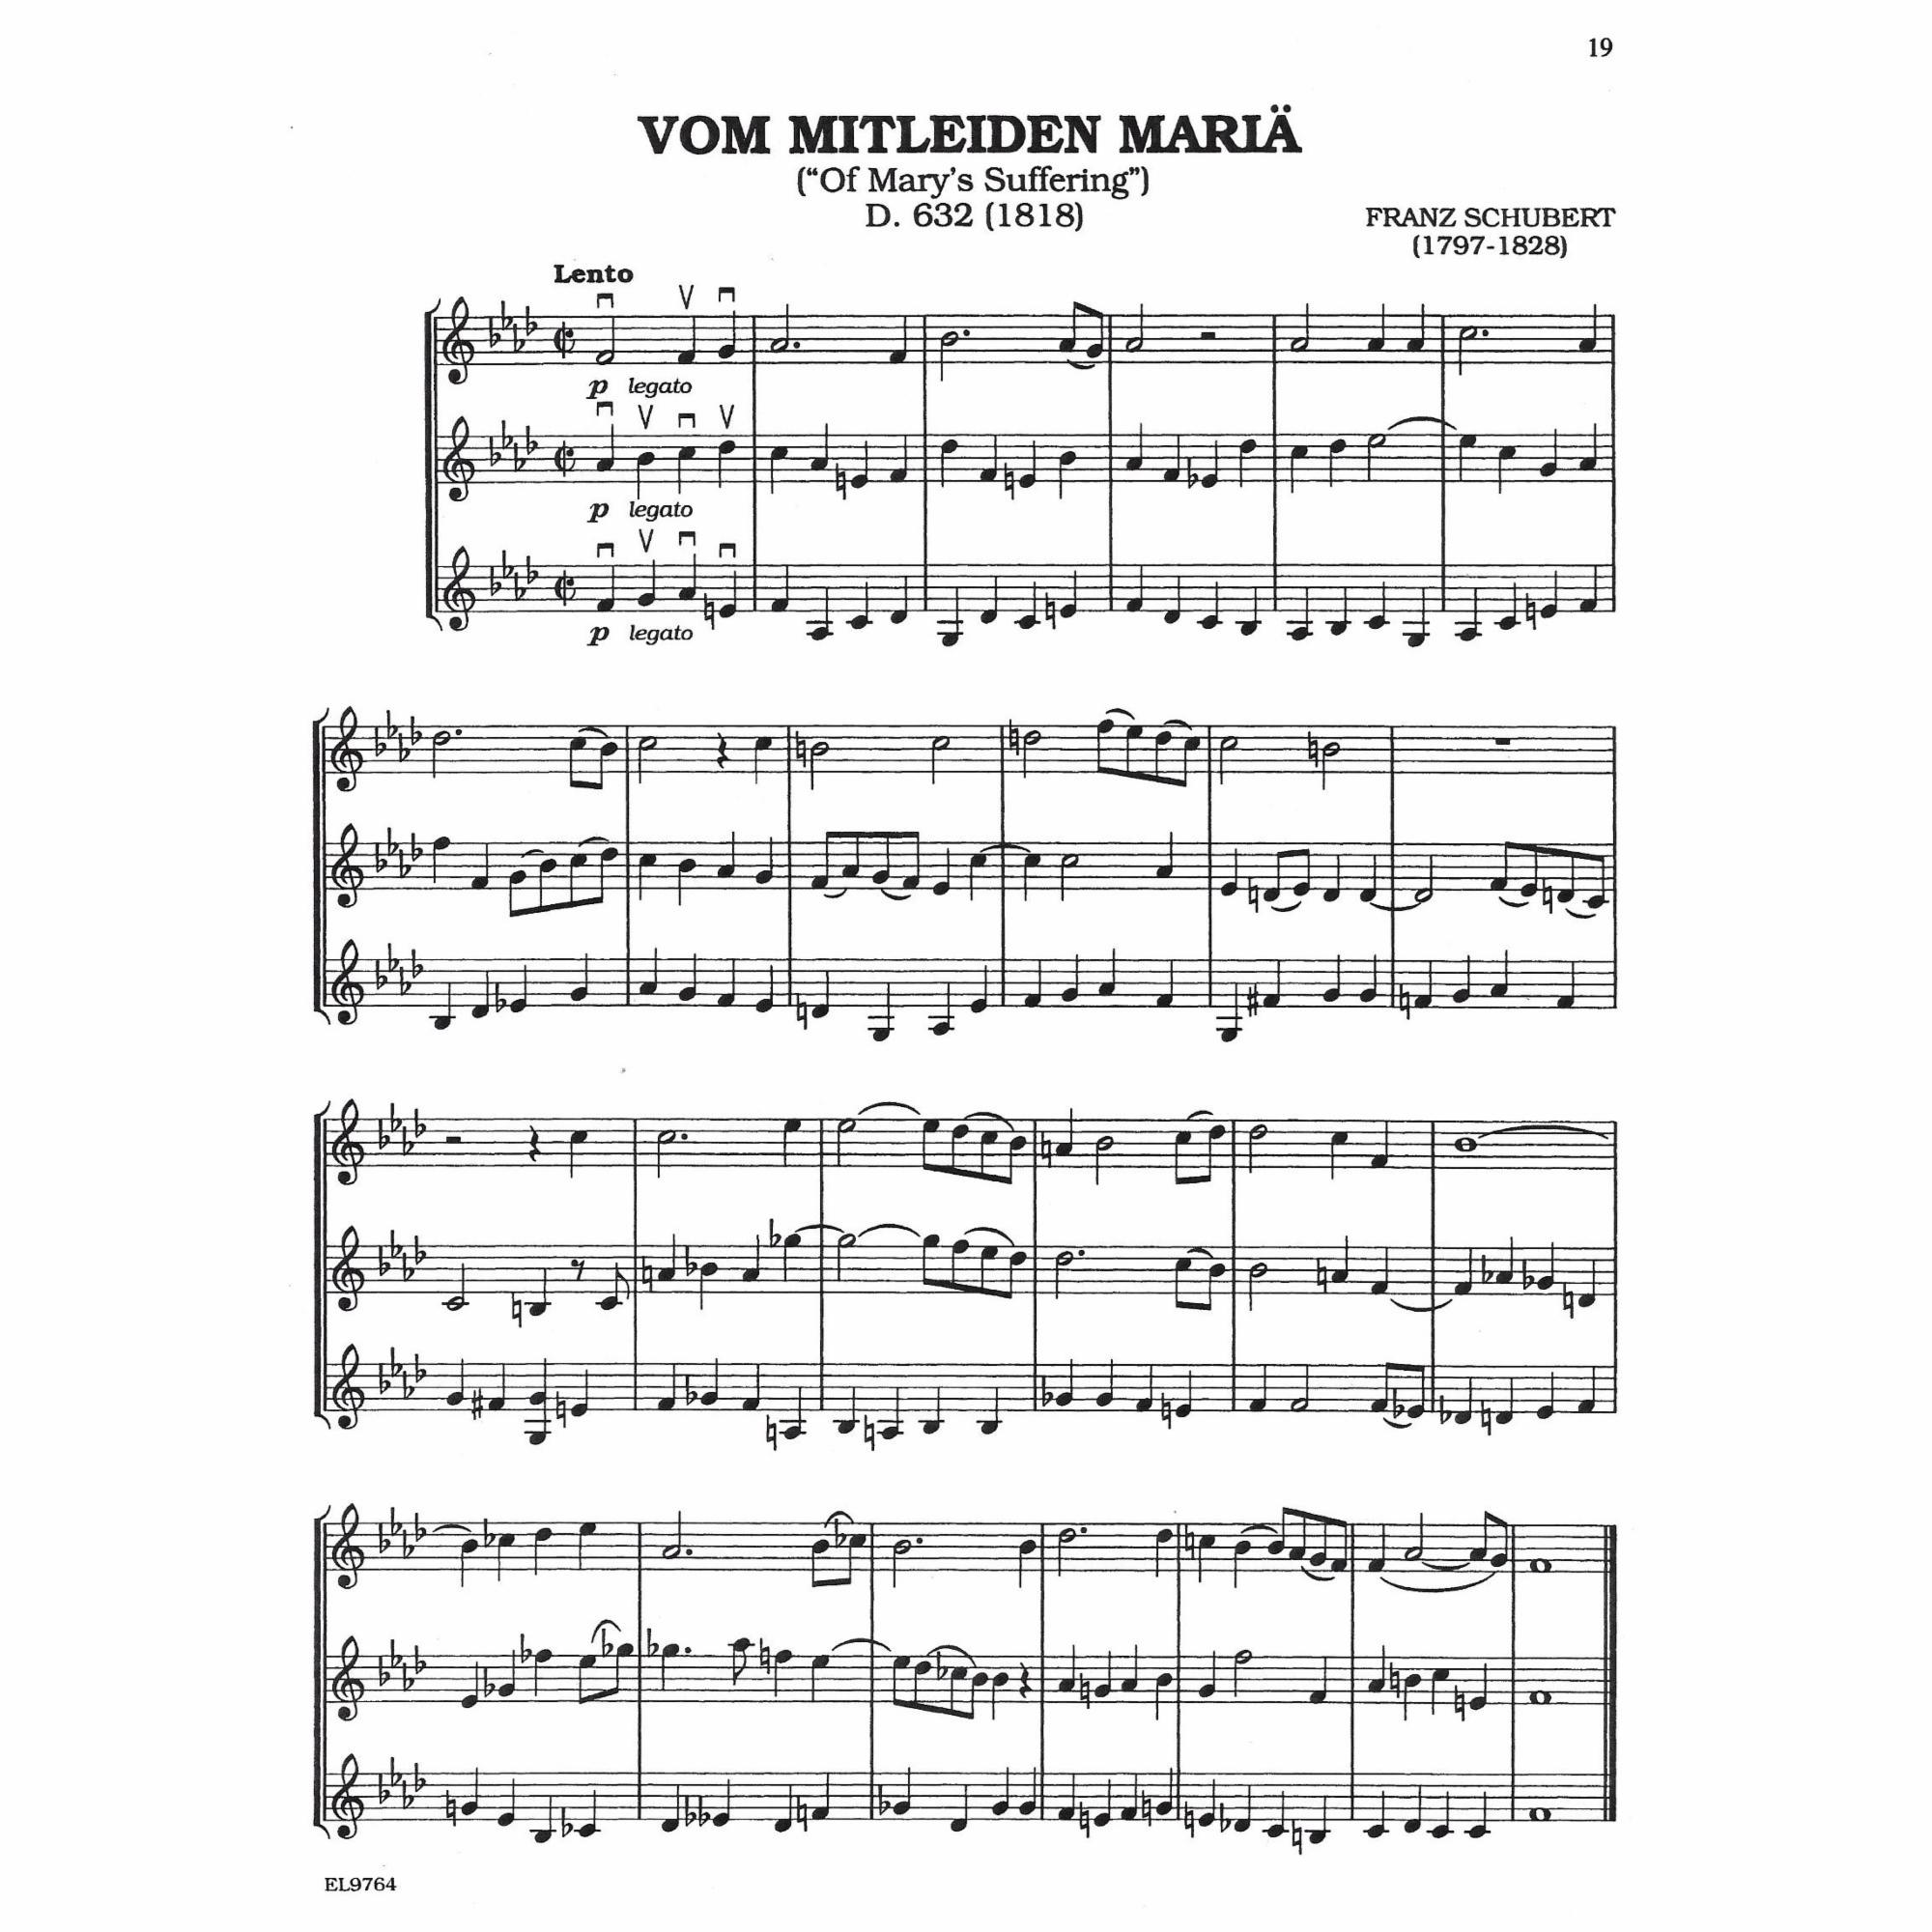 Sample: Three Violins (Pg. 19)